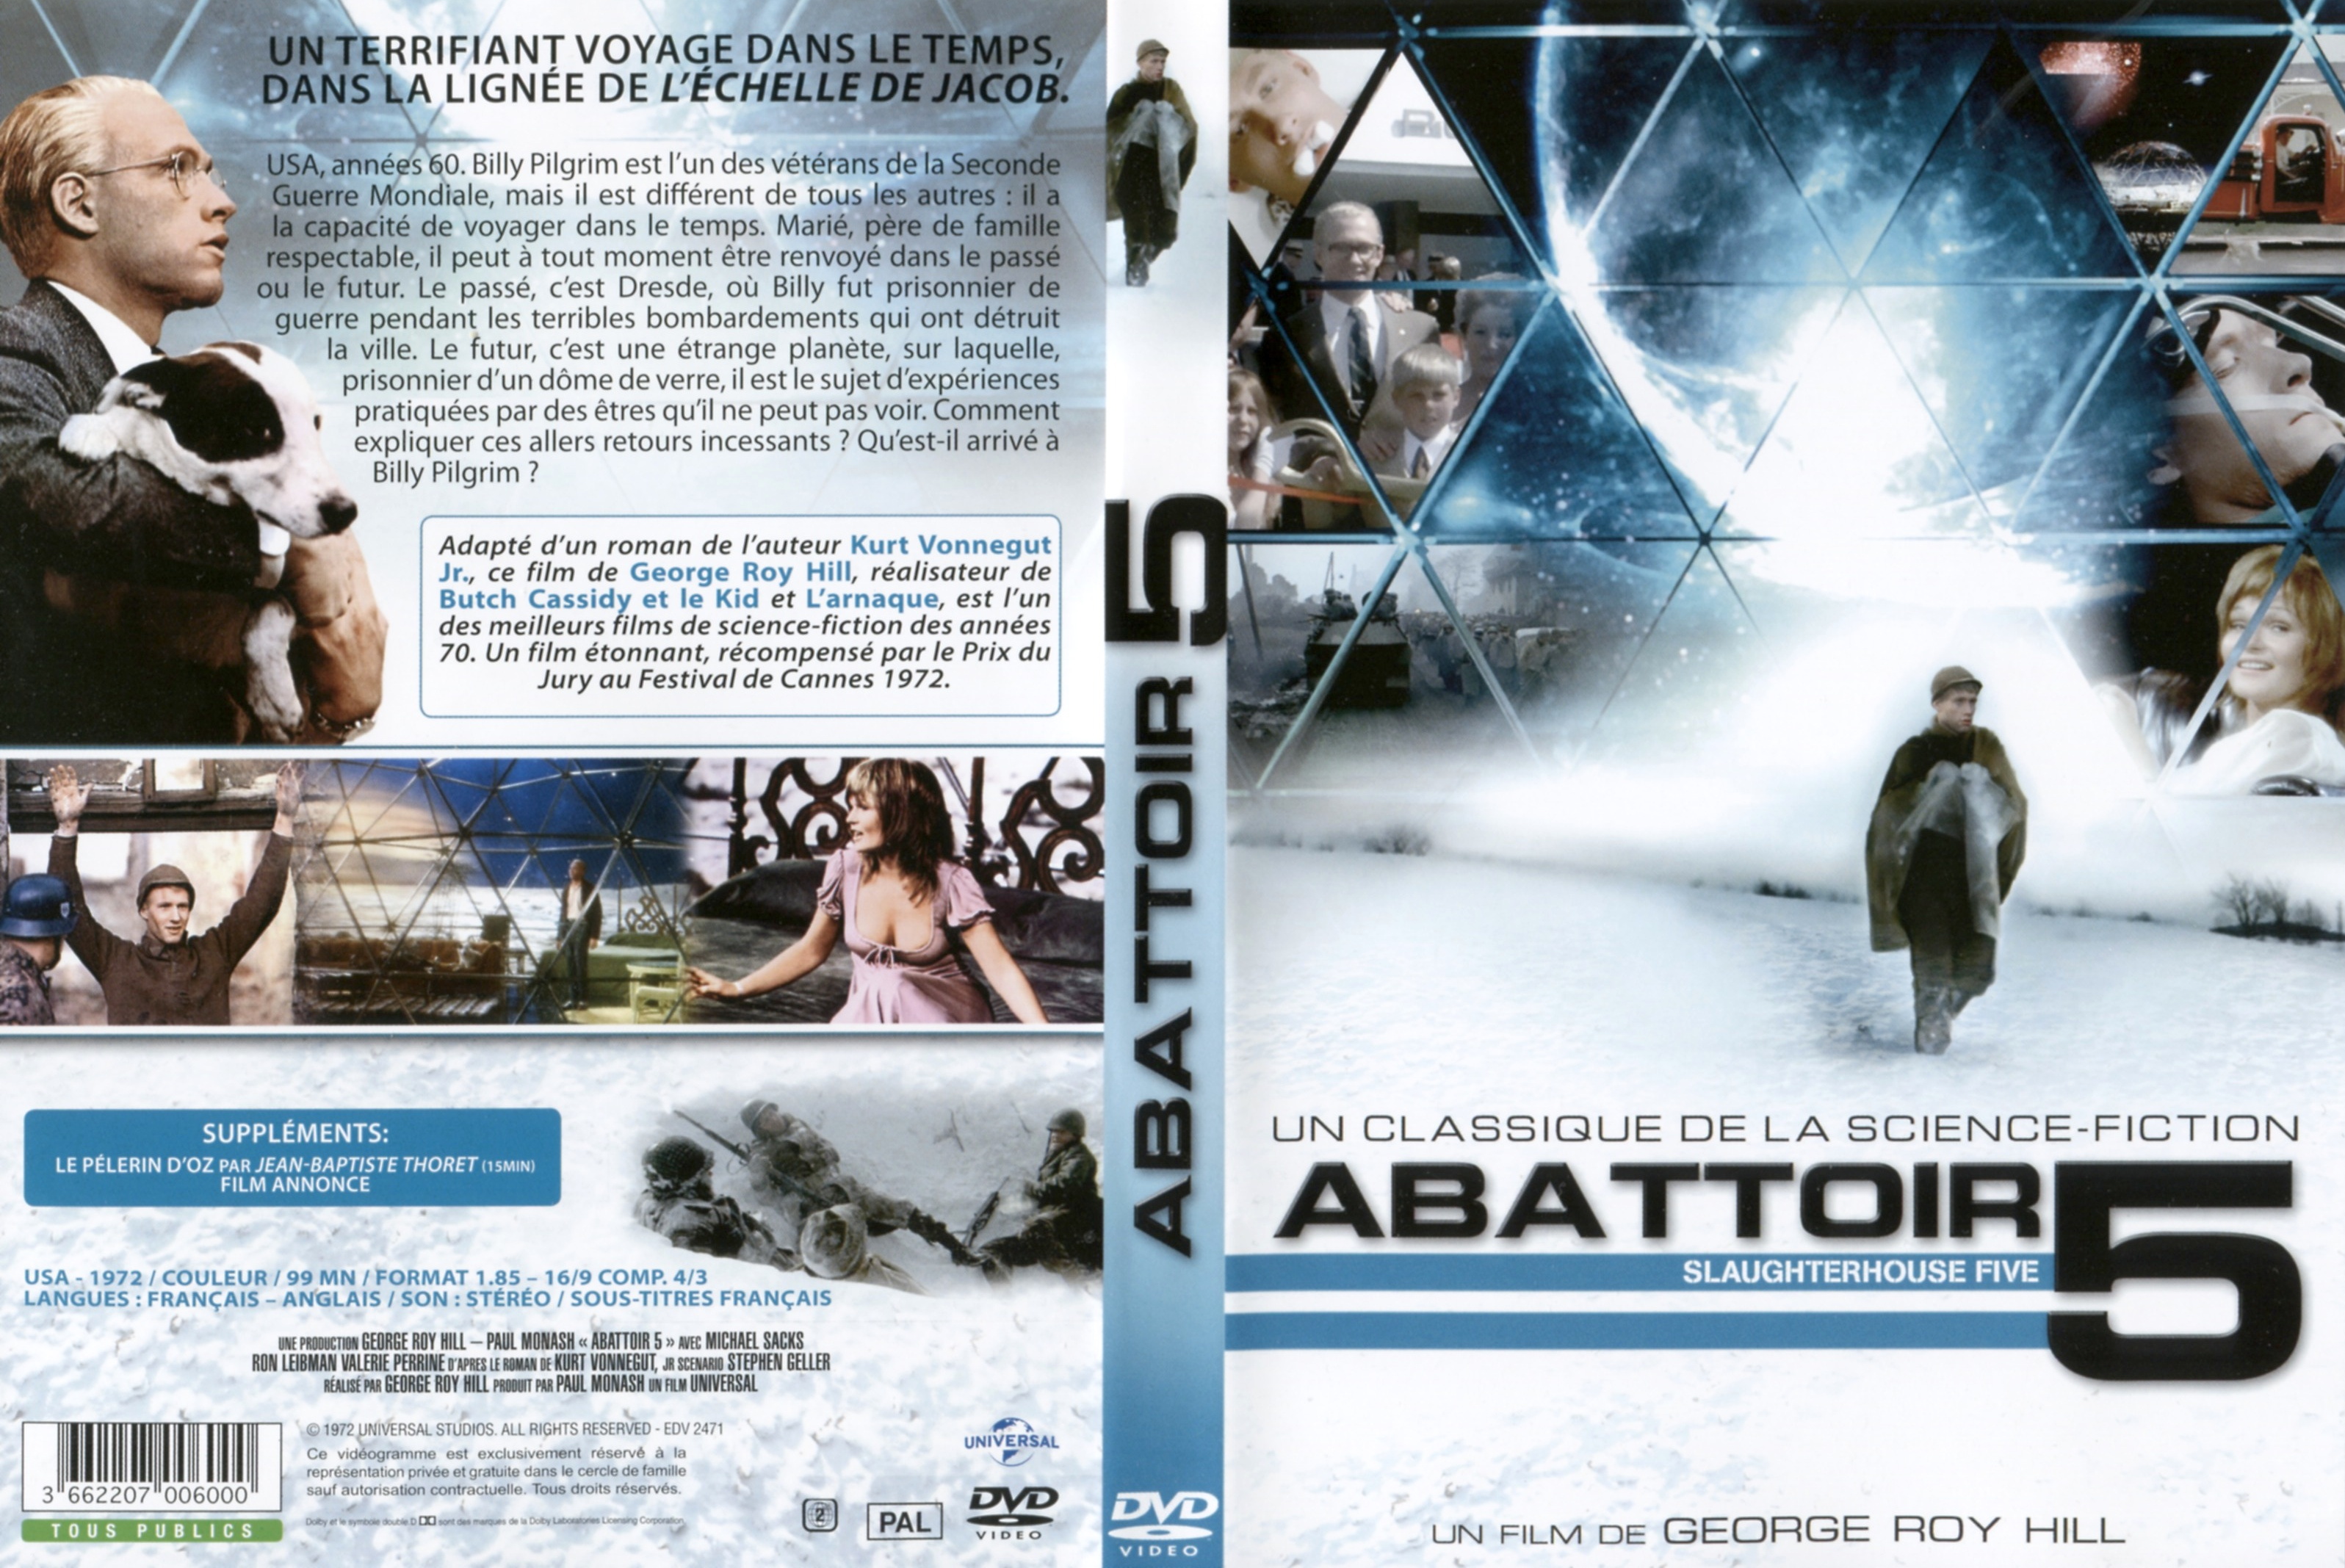 Jaquette DVD Abattoir 5